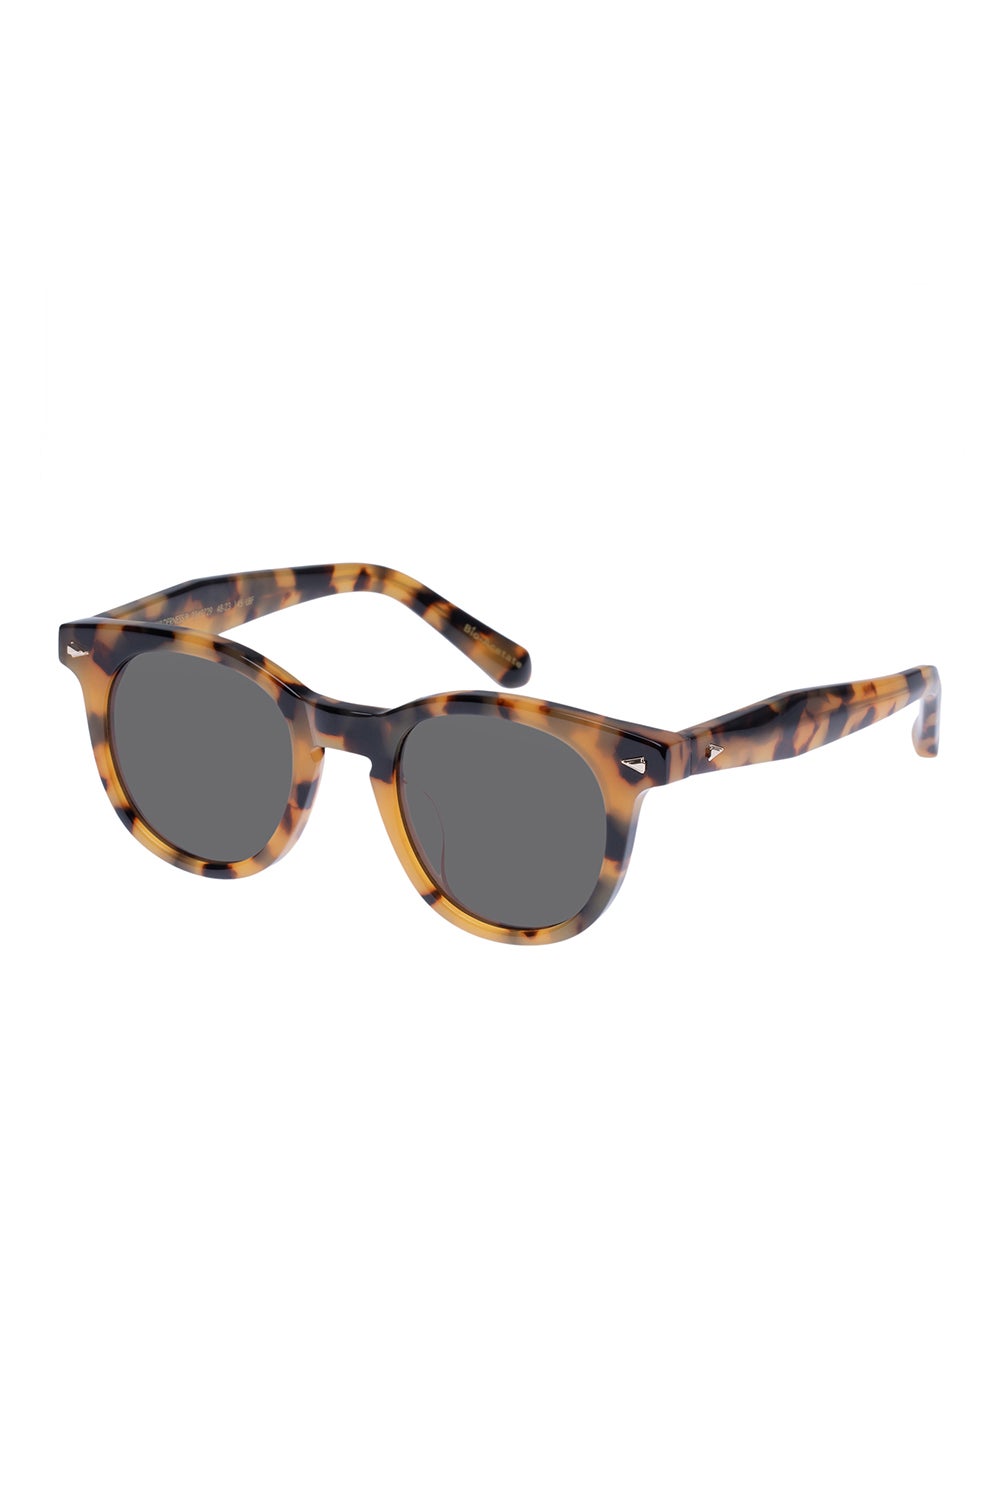 Karen Walker Moon Disco Tortoise & Gold Sunglasses | Karen walker, Gold  sunglasses, Tortoise sunglasses